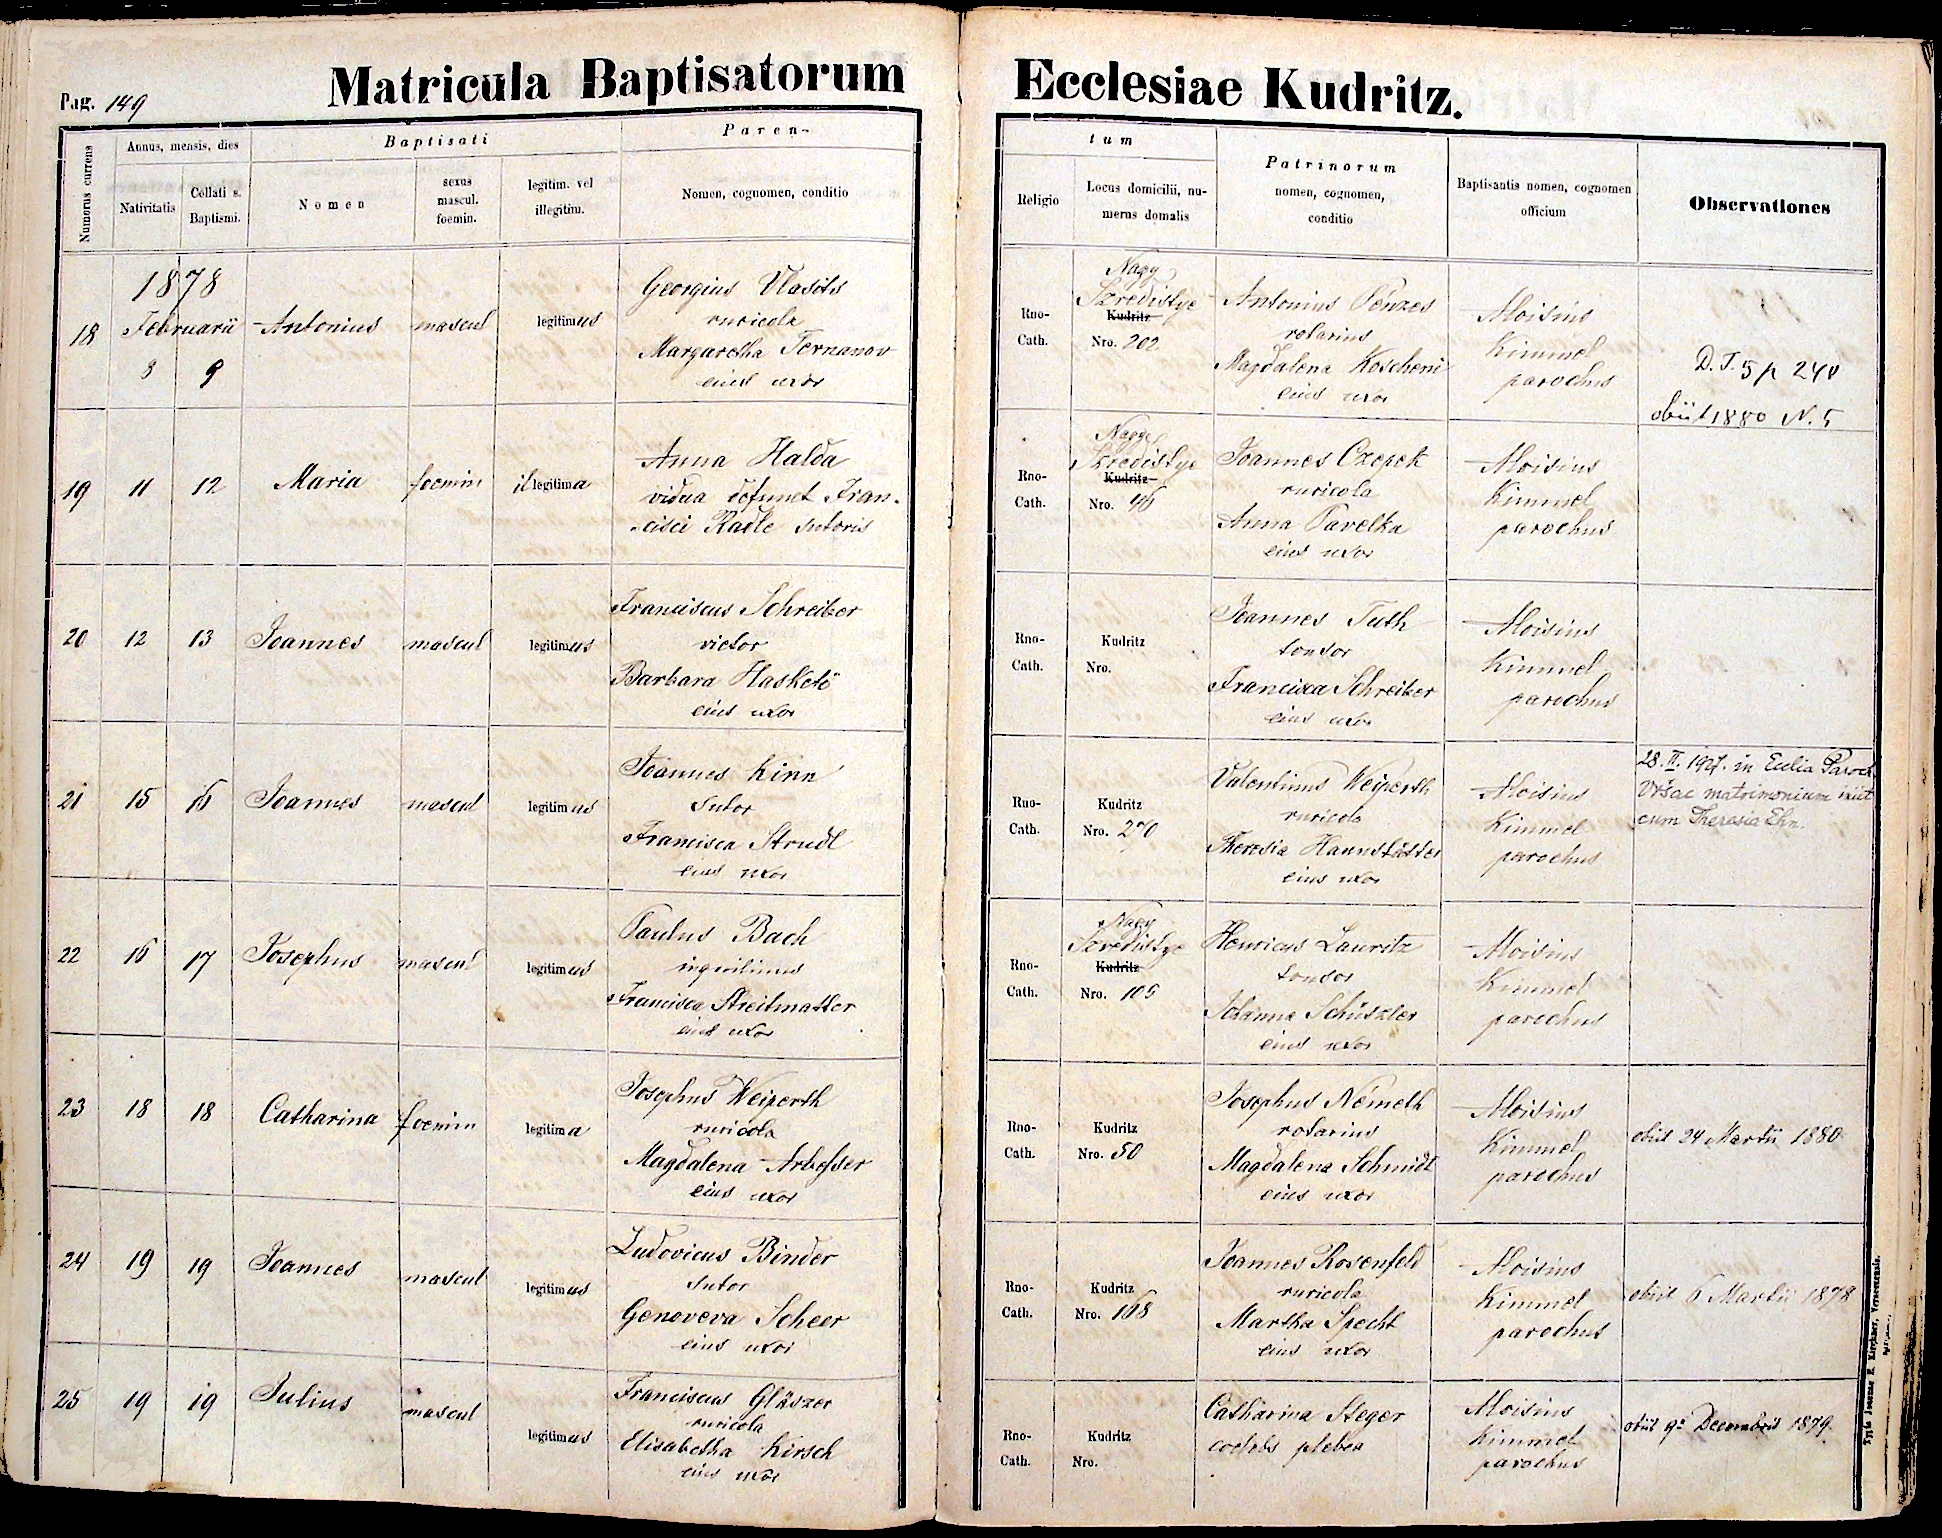 images/church_records/BIRTHS/1884-1899B/1894/149